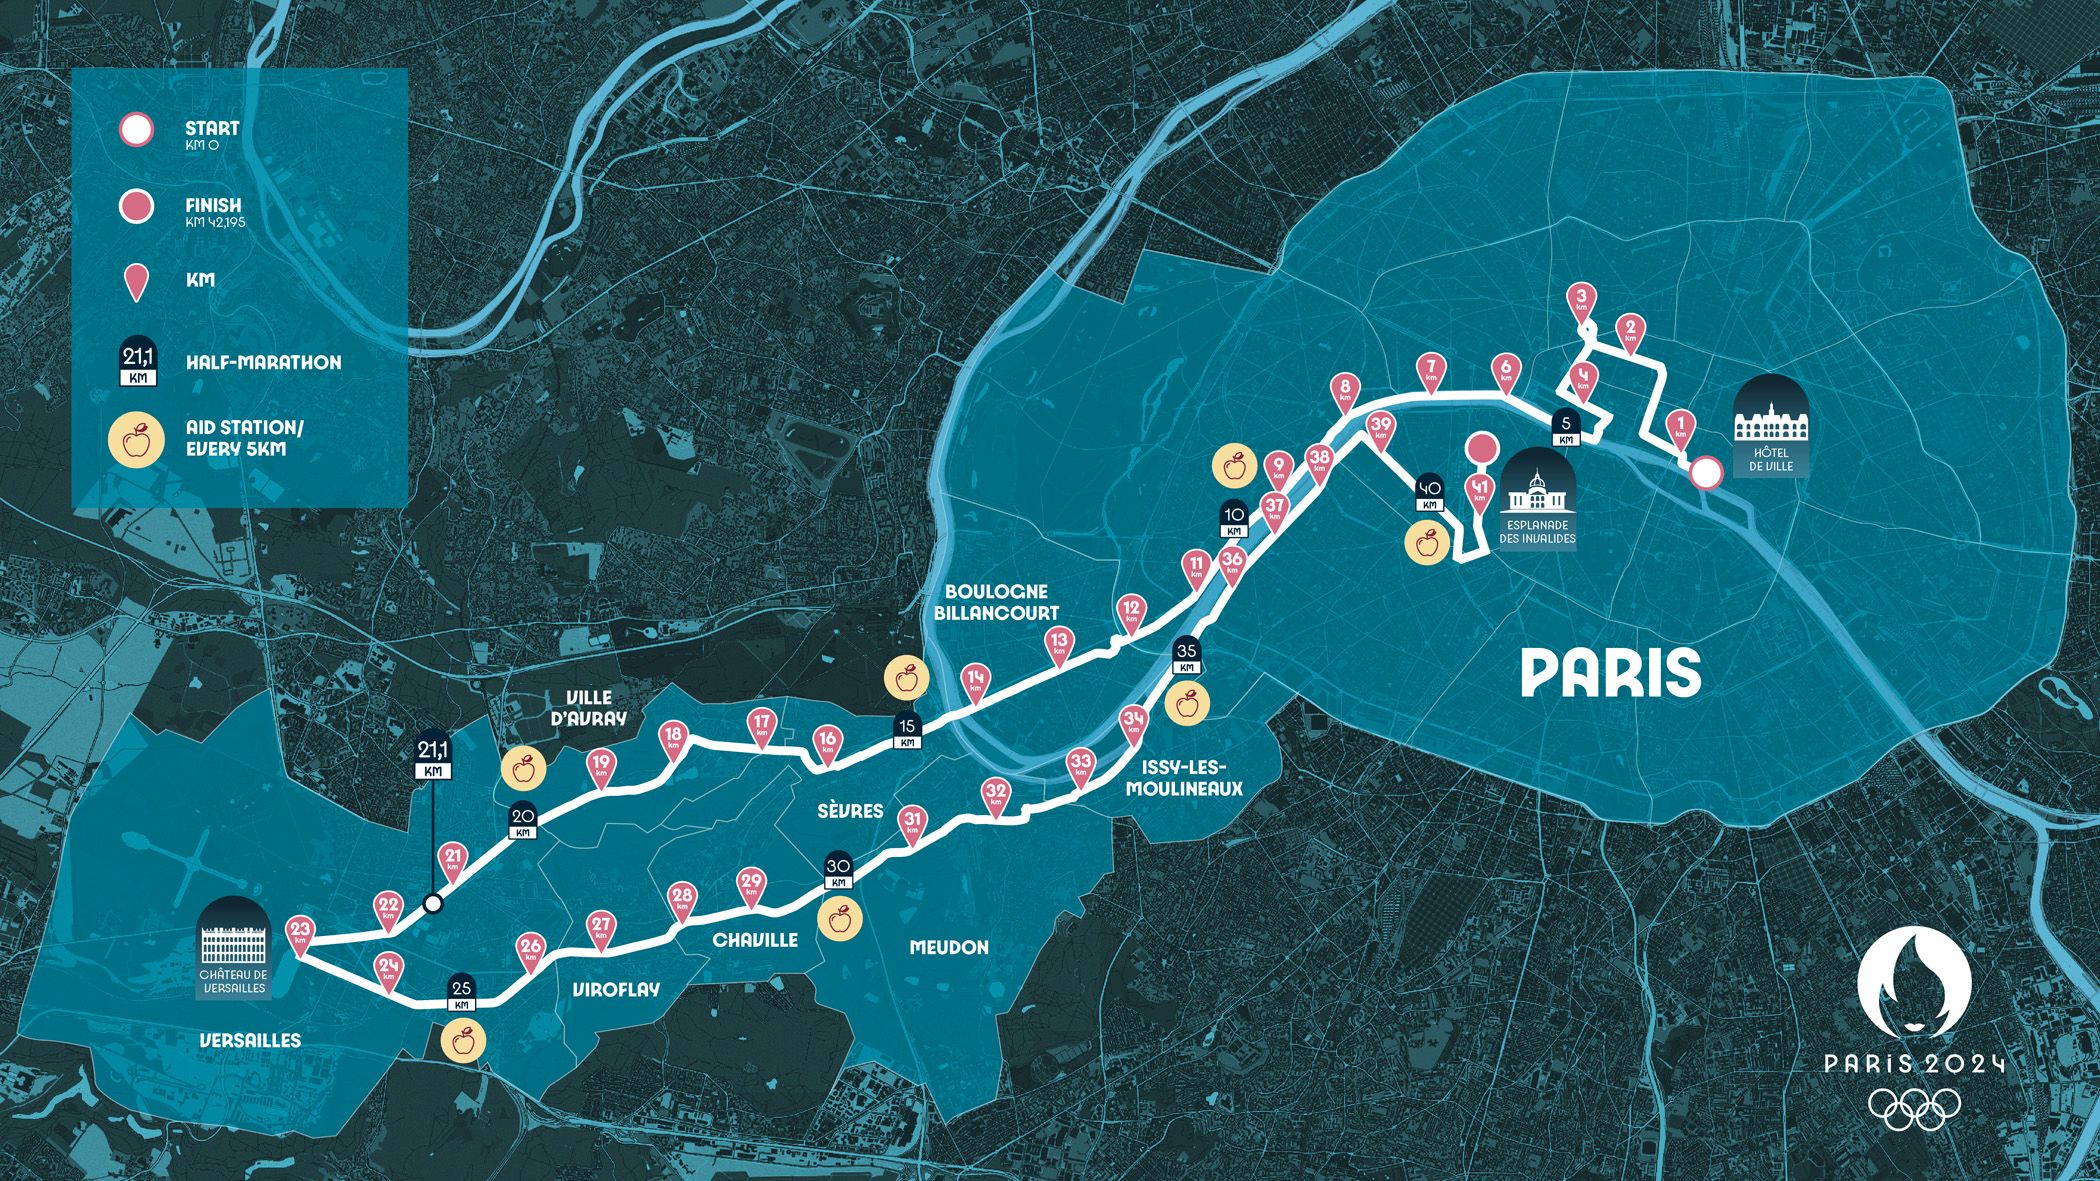 Marathon course for the Paris 2024 Olympic Games